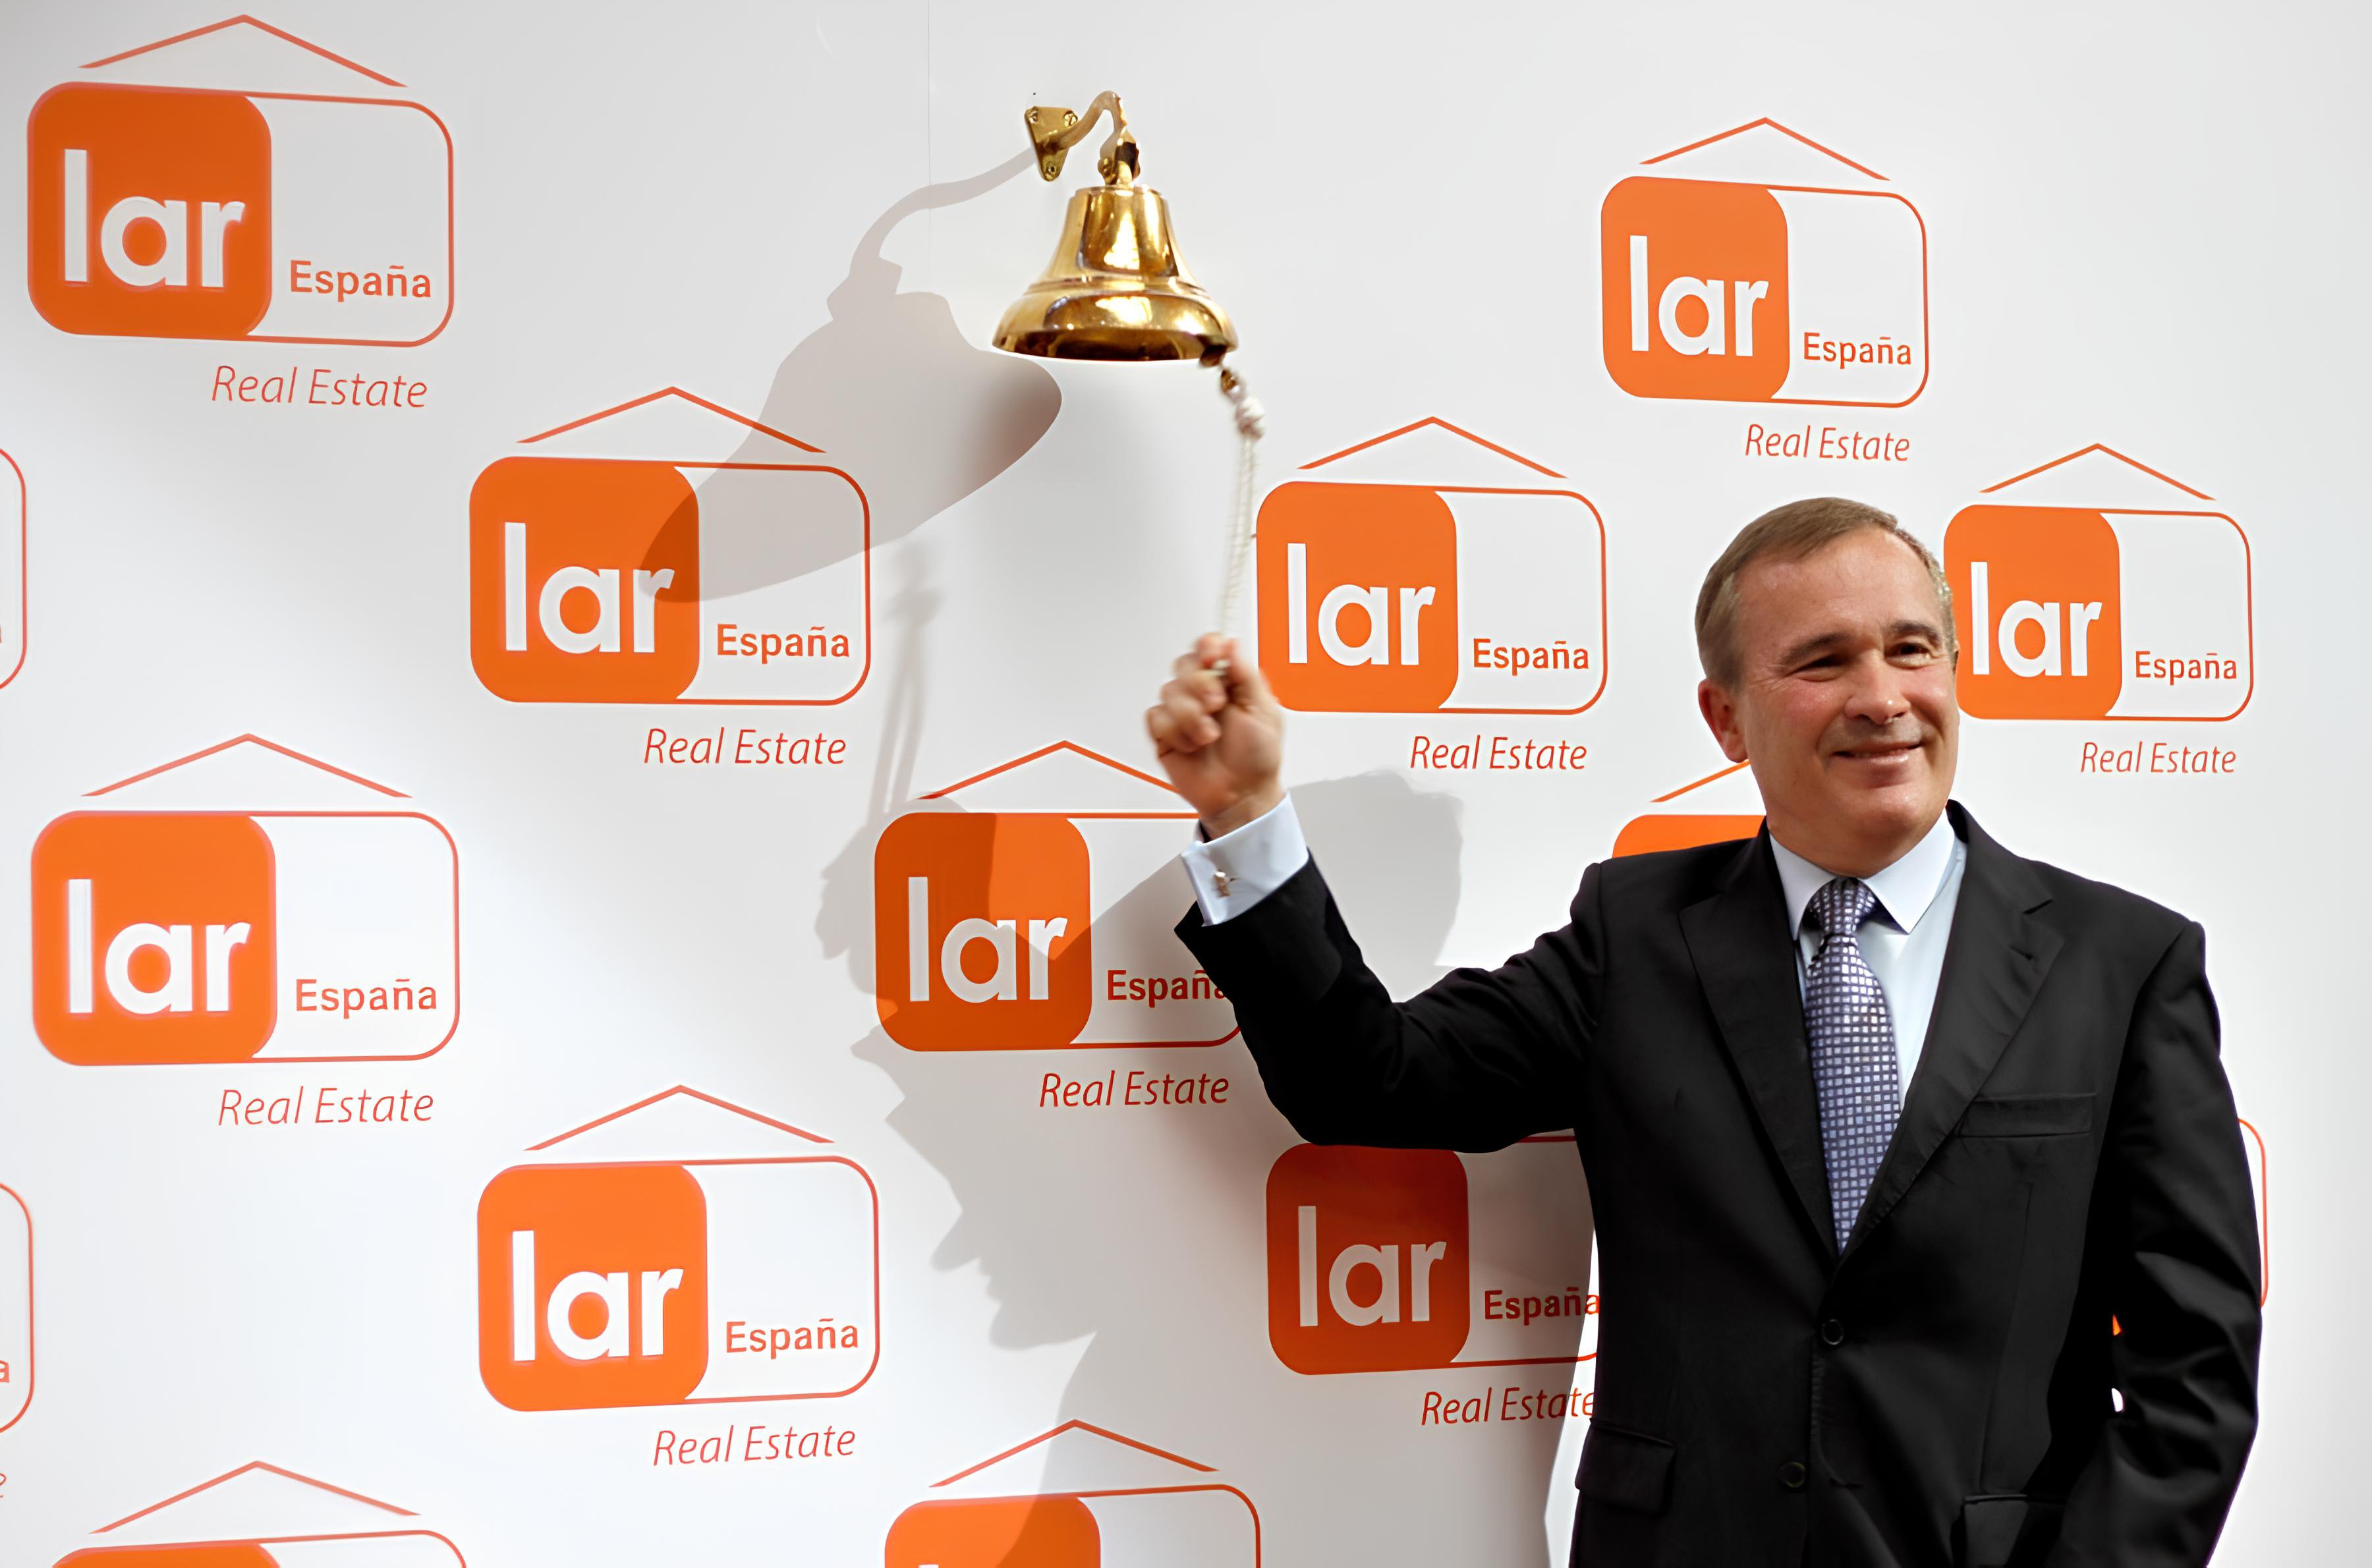 Lar España “bell ring” in 2014.